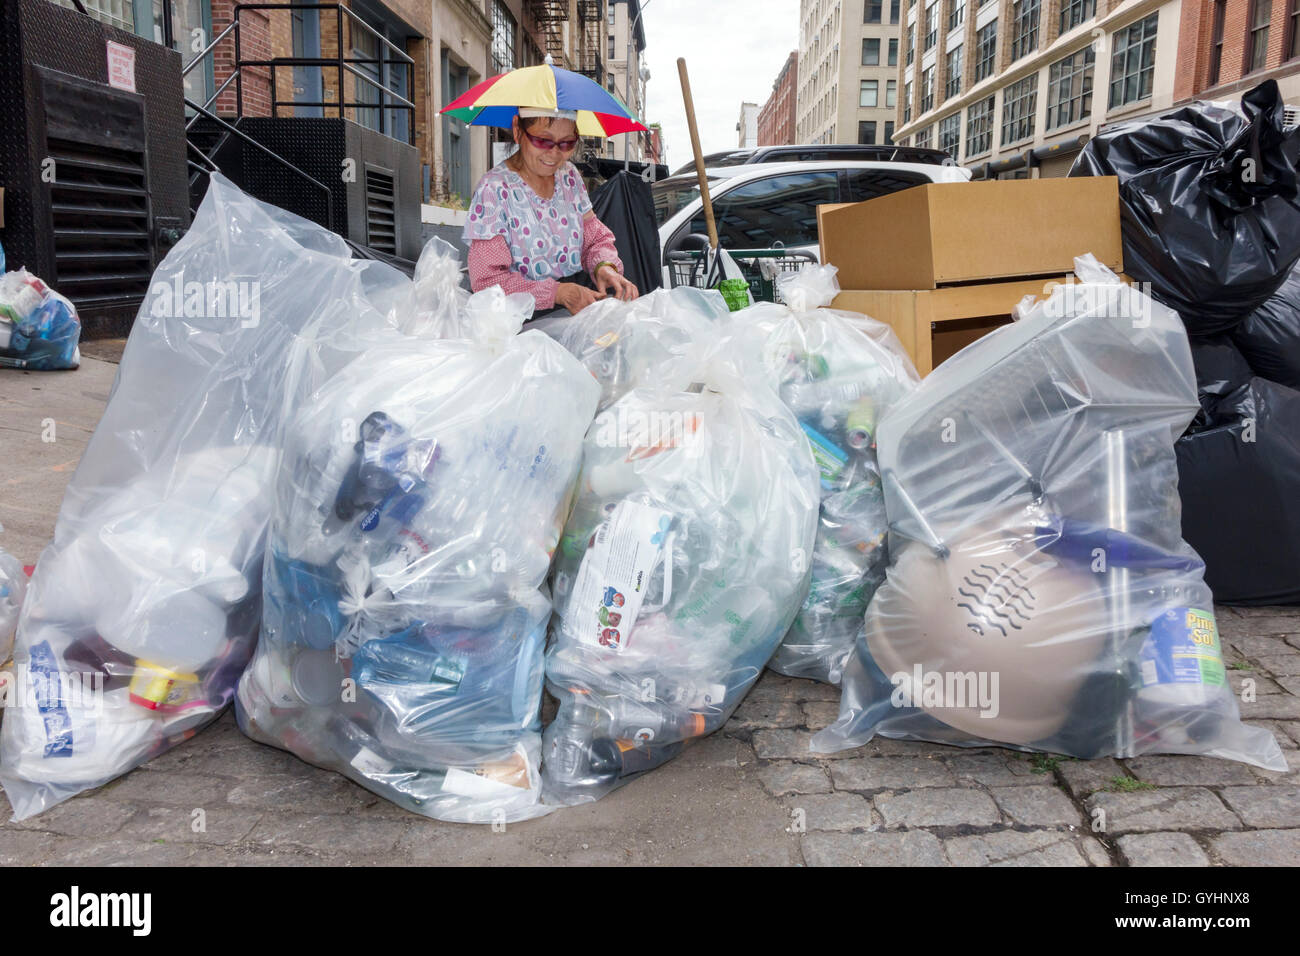 New York City,NY NYC Lower Manhattan,Tribeca,Asian adult adults,woman female women,mature,recycling,plastic trash bags,umbrella hat,NY160716114 Stock Photo